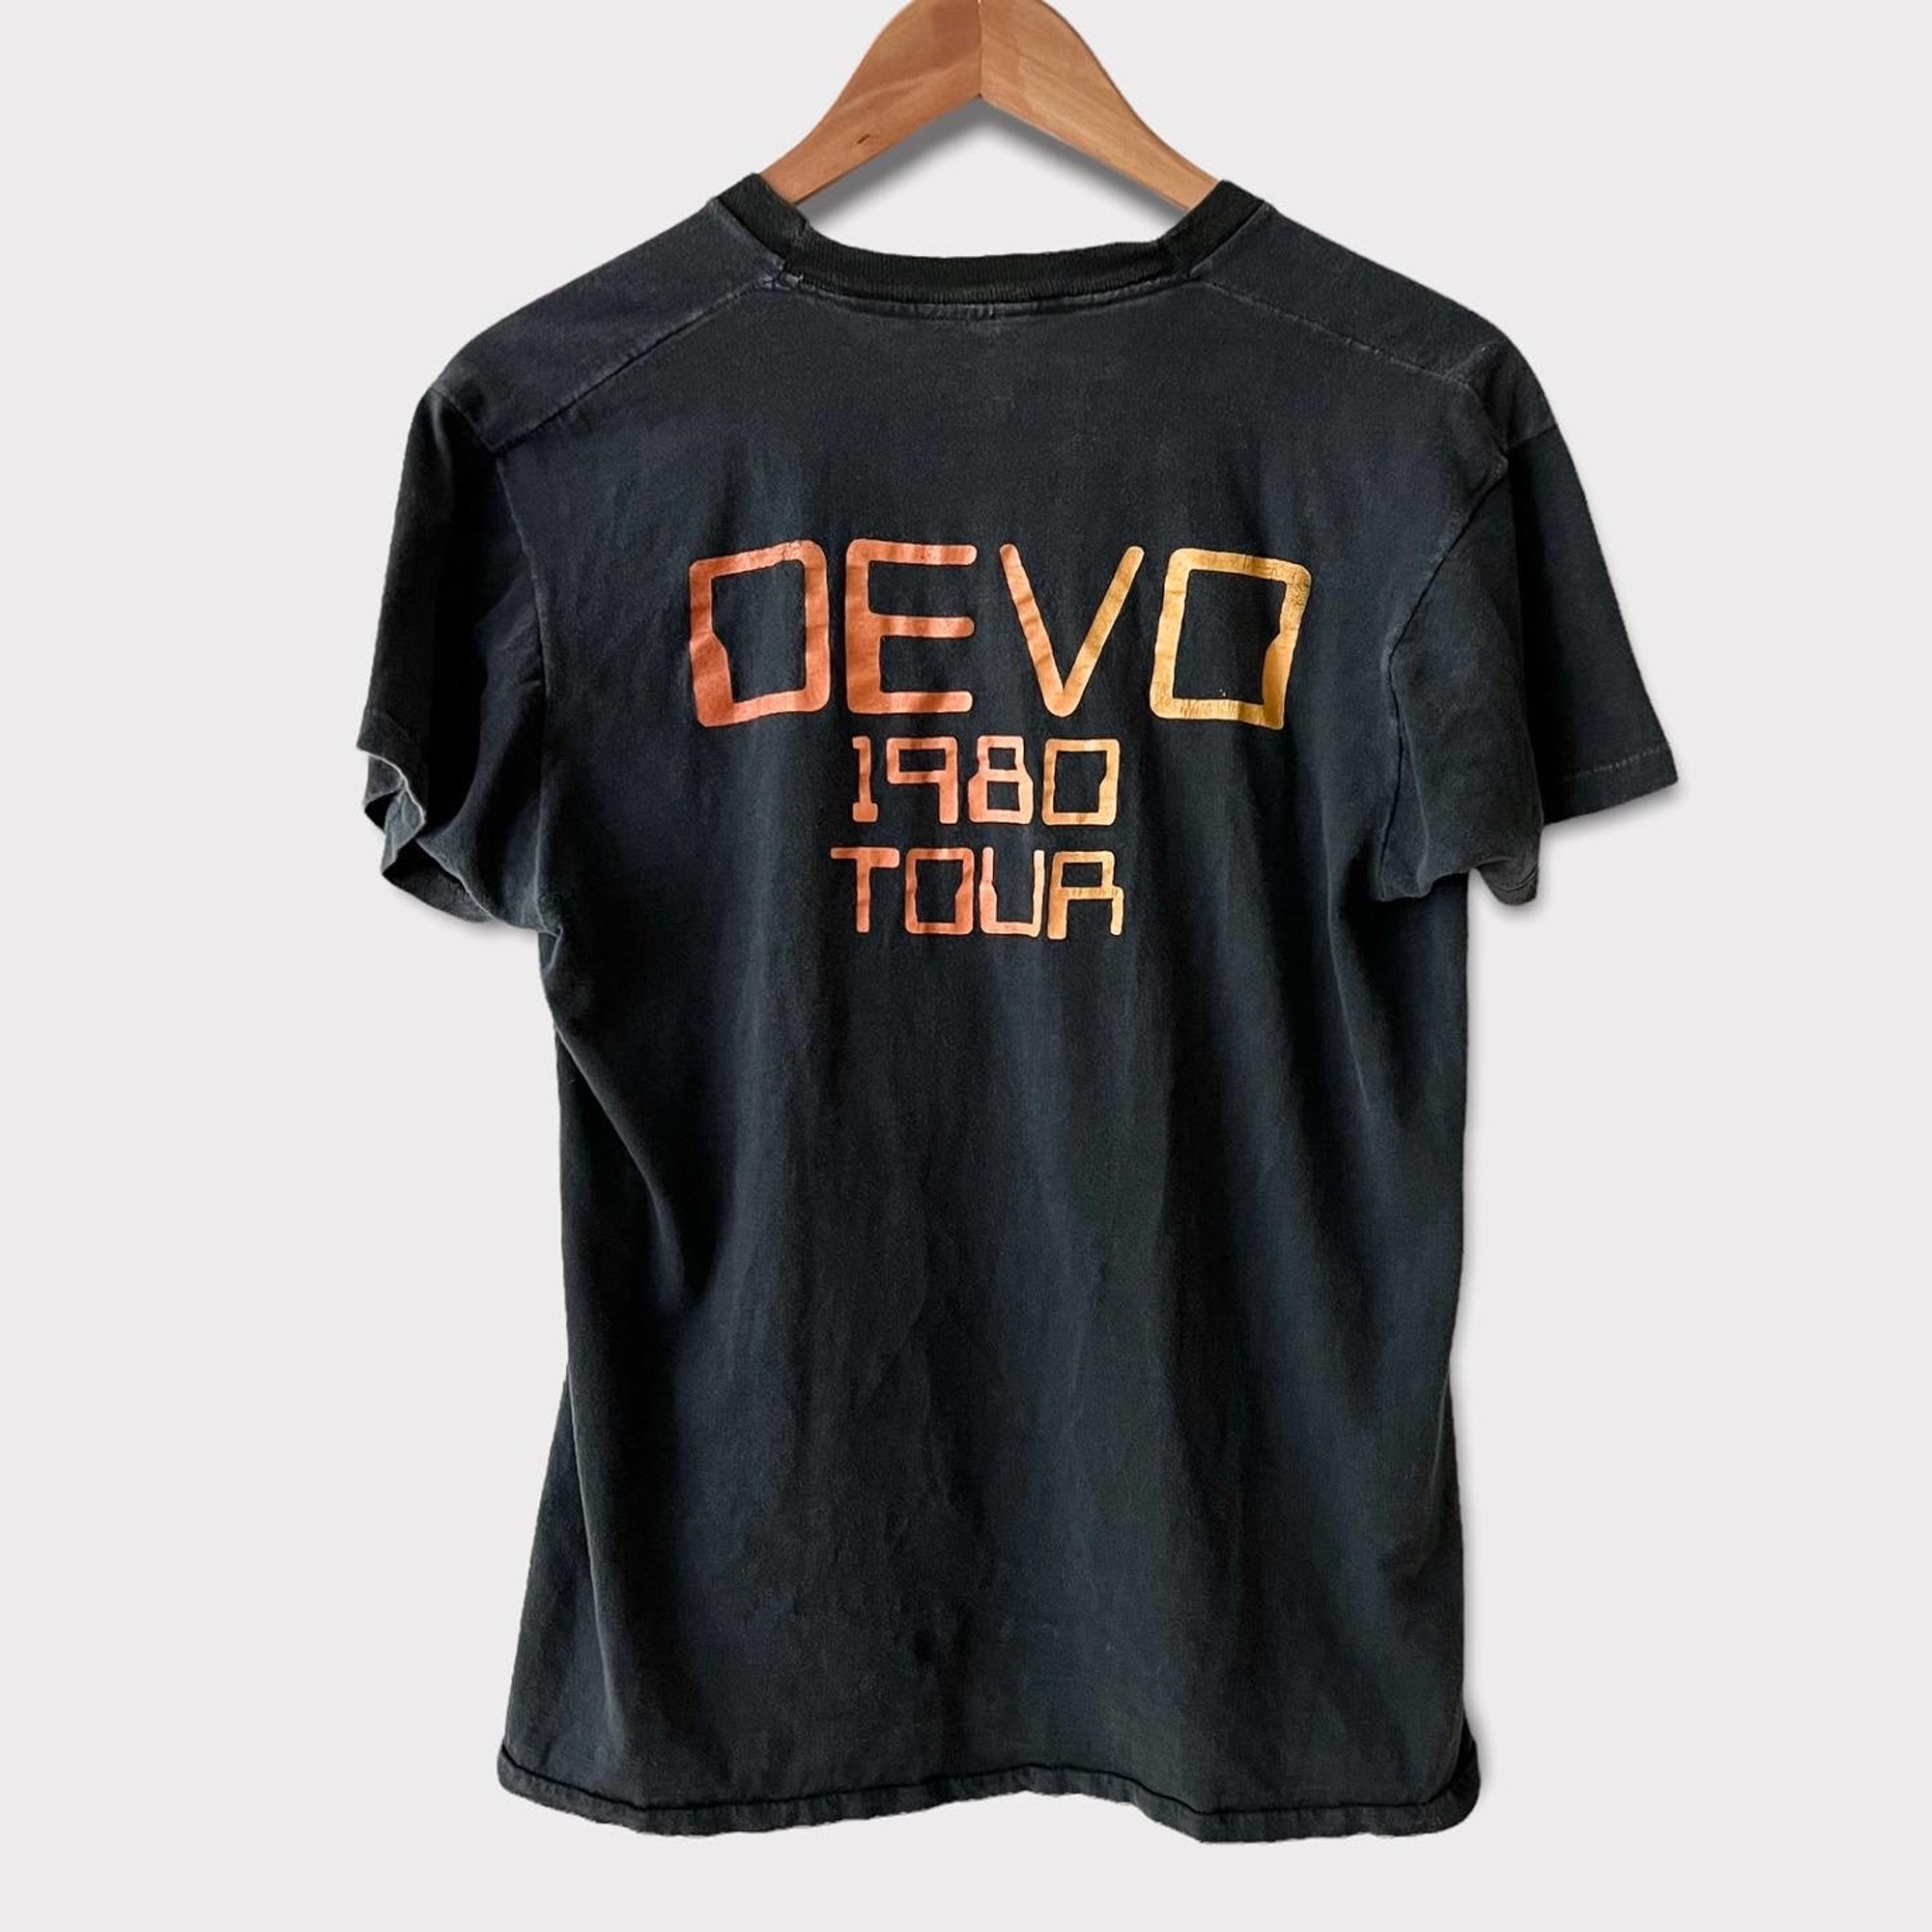 Discover 1980 Devo Vintage Tour Band N€W Wave Tee Shirt 80s